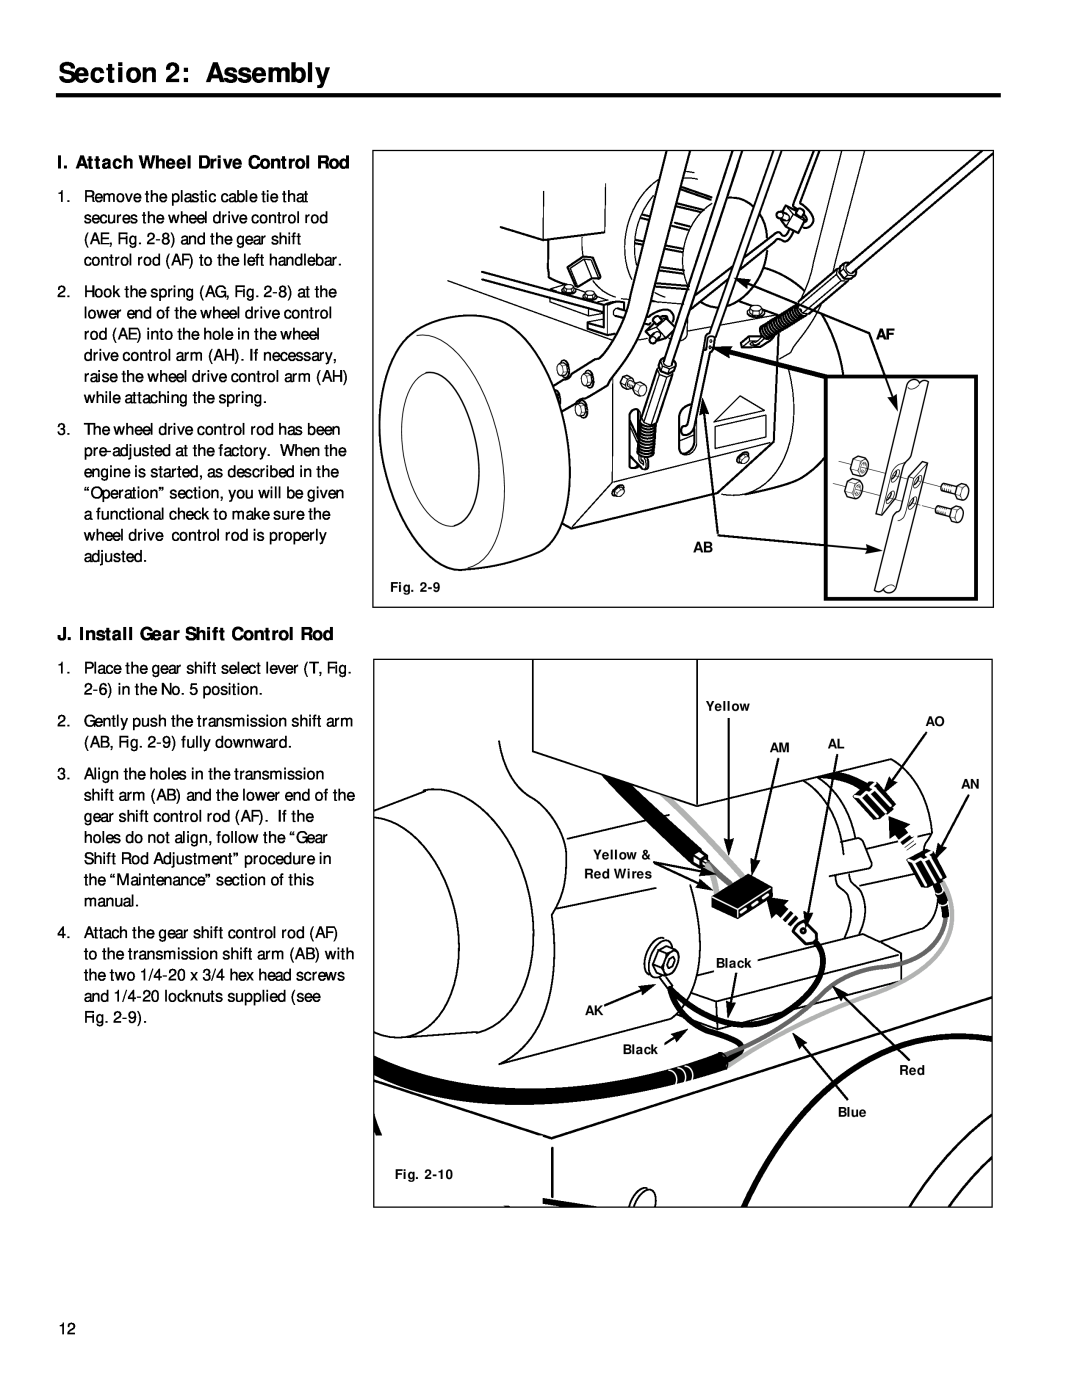 Troy-Bilt 42031, 42012, 42010, 42030 manual J. Install Gear Shift Control Rod, Assembly, I. Attach Wheel Drive Control Rod 